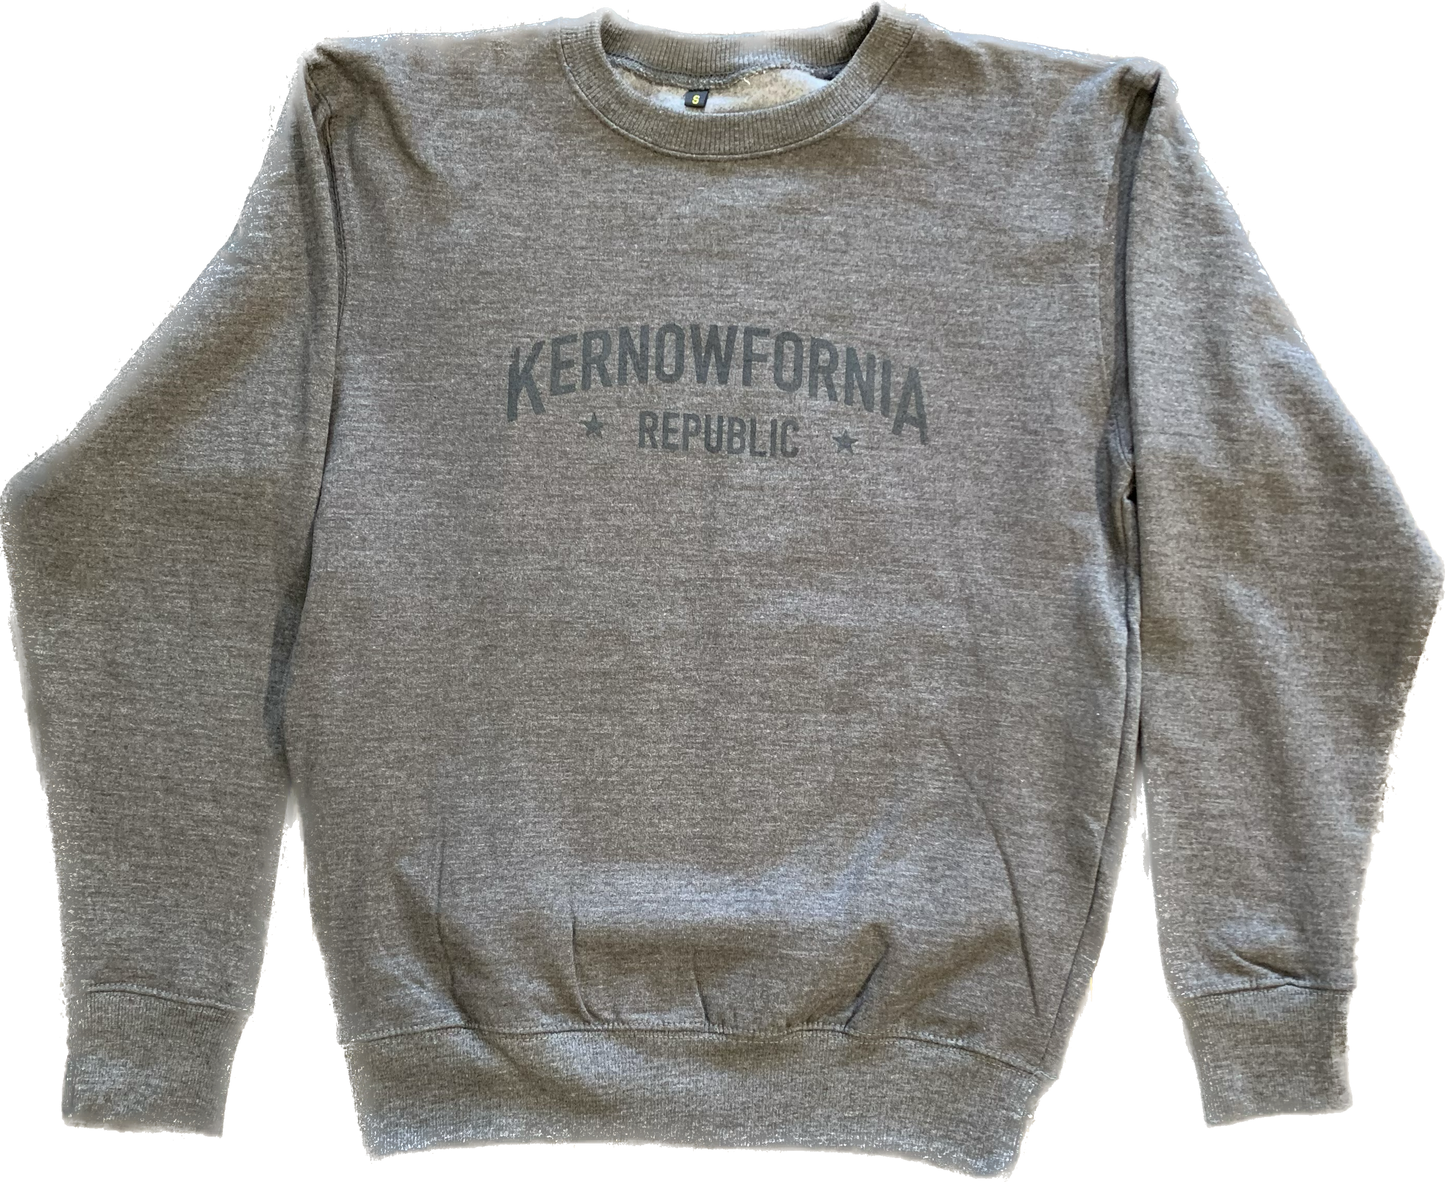 Kernowfornia sweatshirt